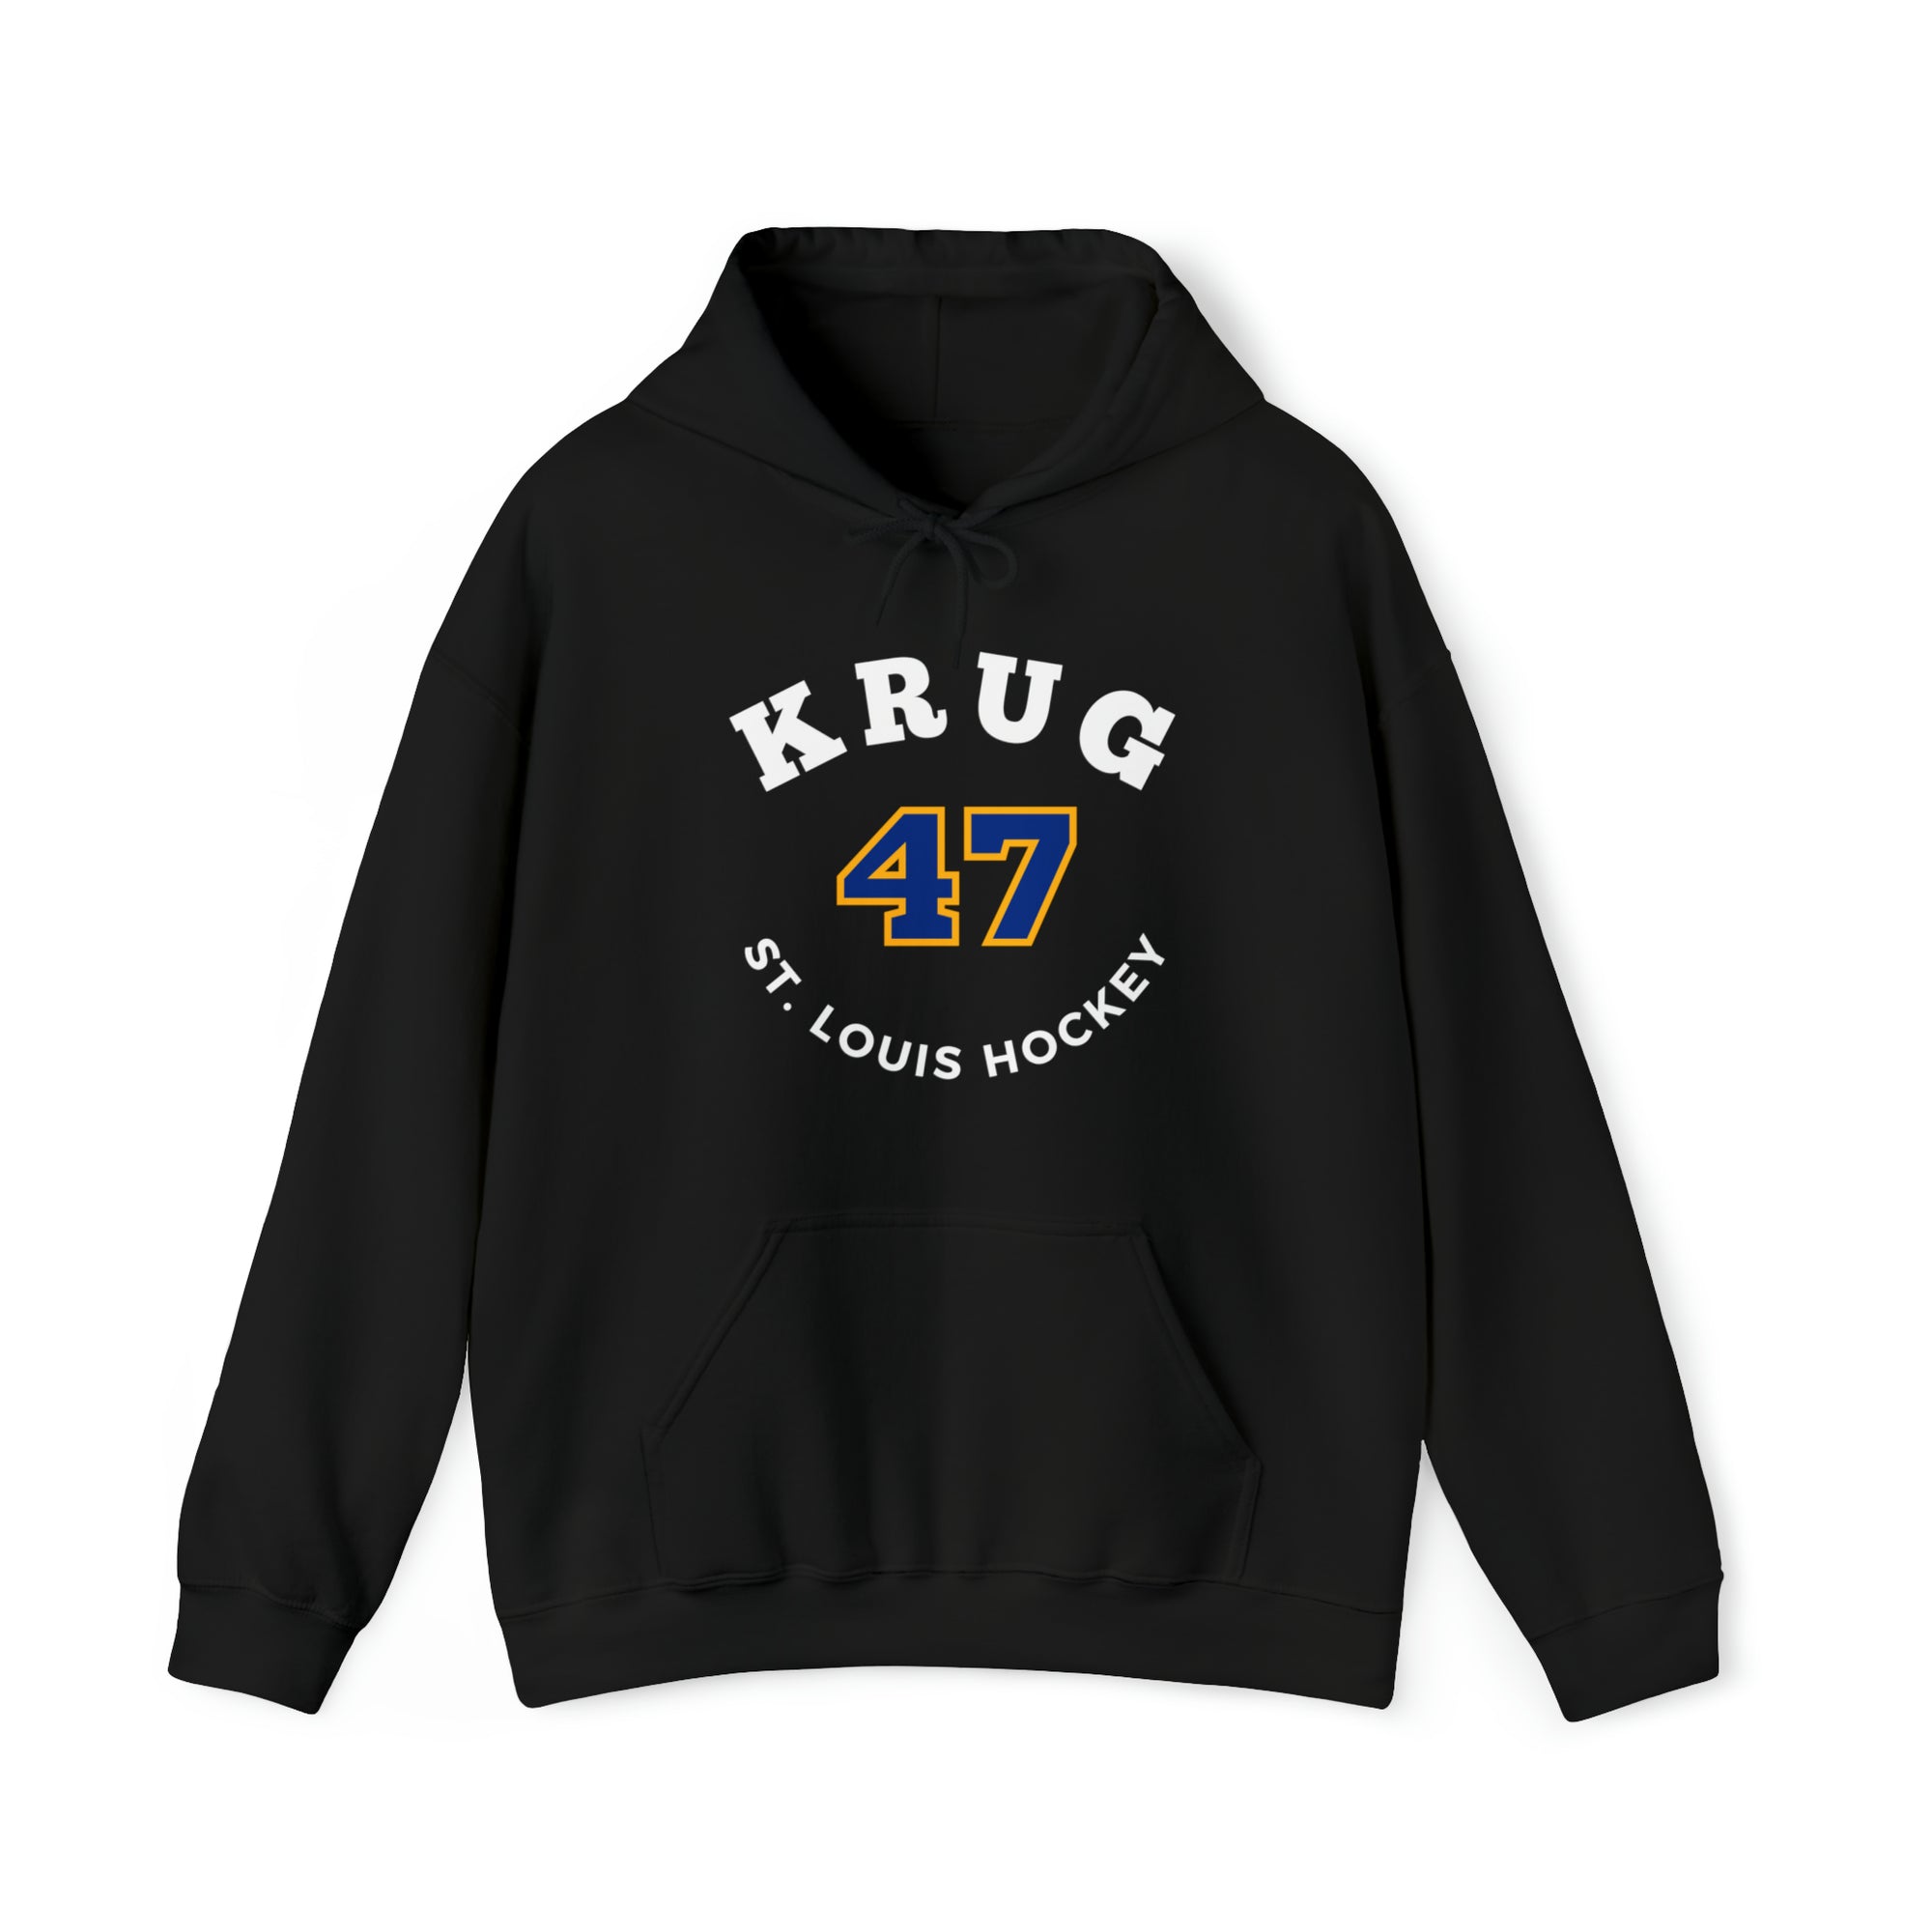 Krug 47 St. Louis Hockey Number Arch Design Unisex Hooded Sweatshirt